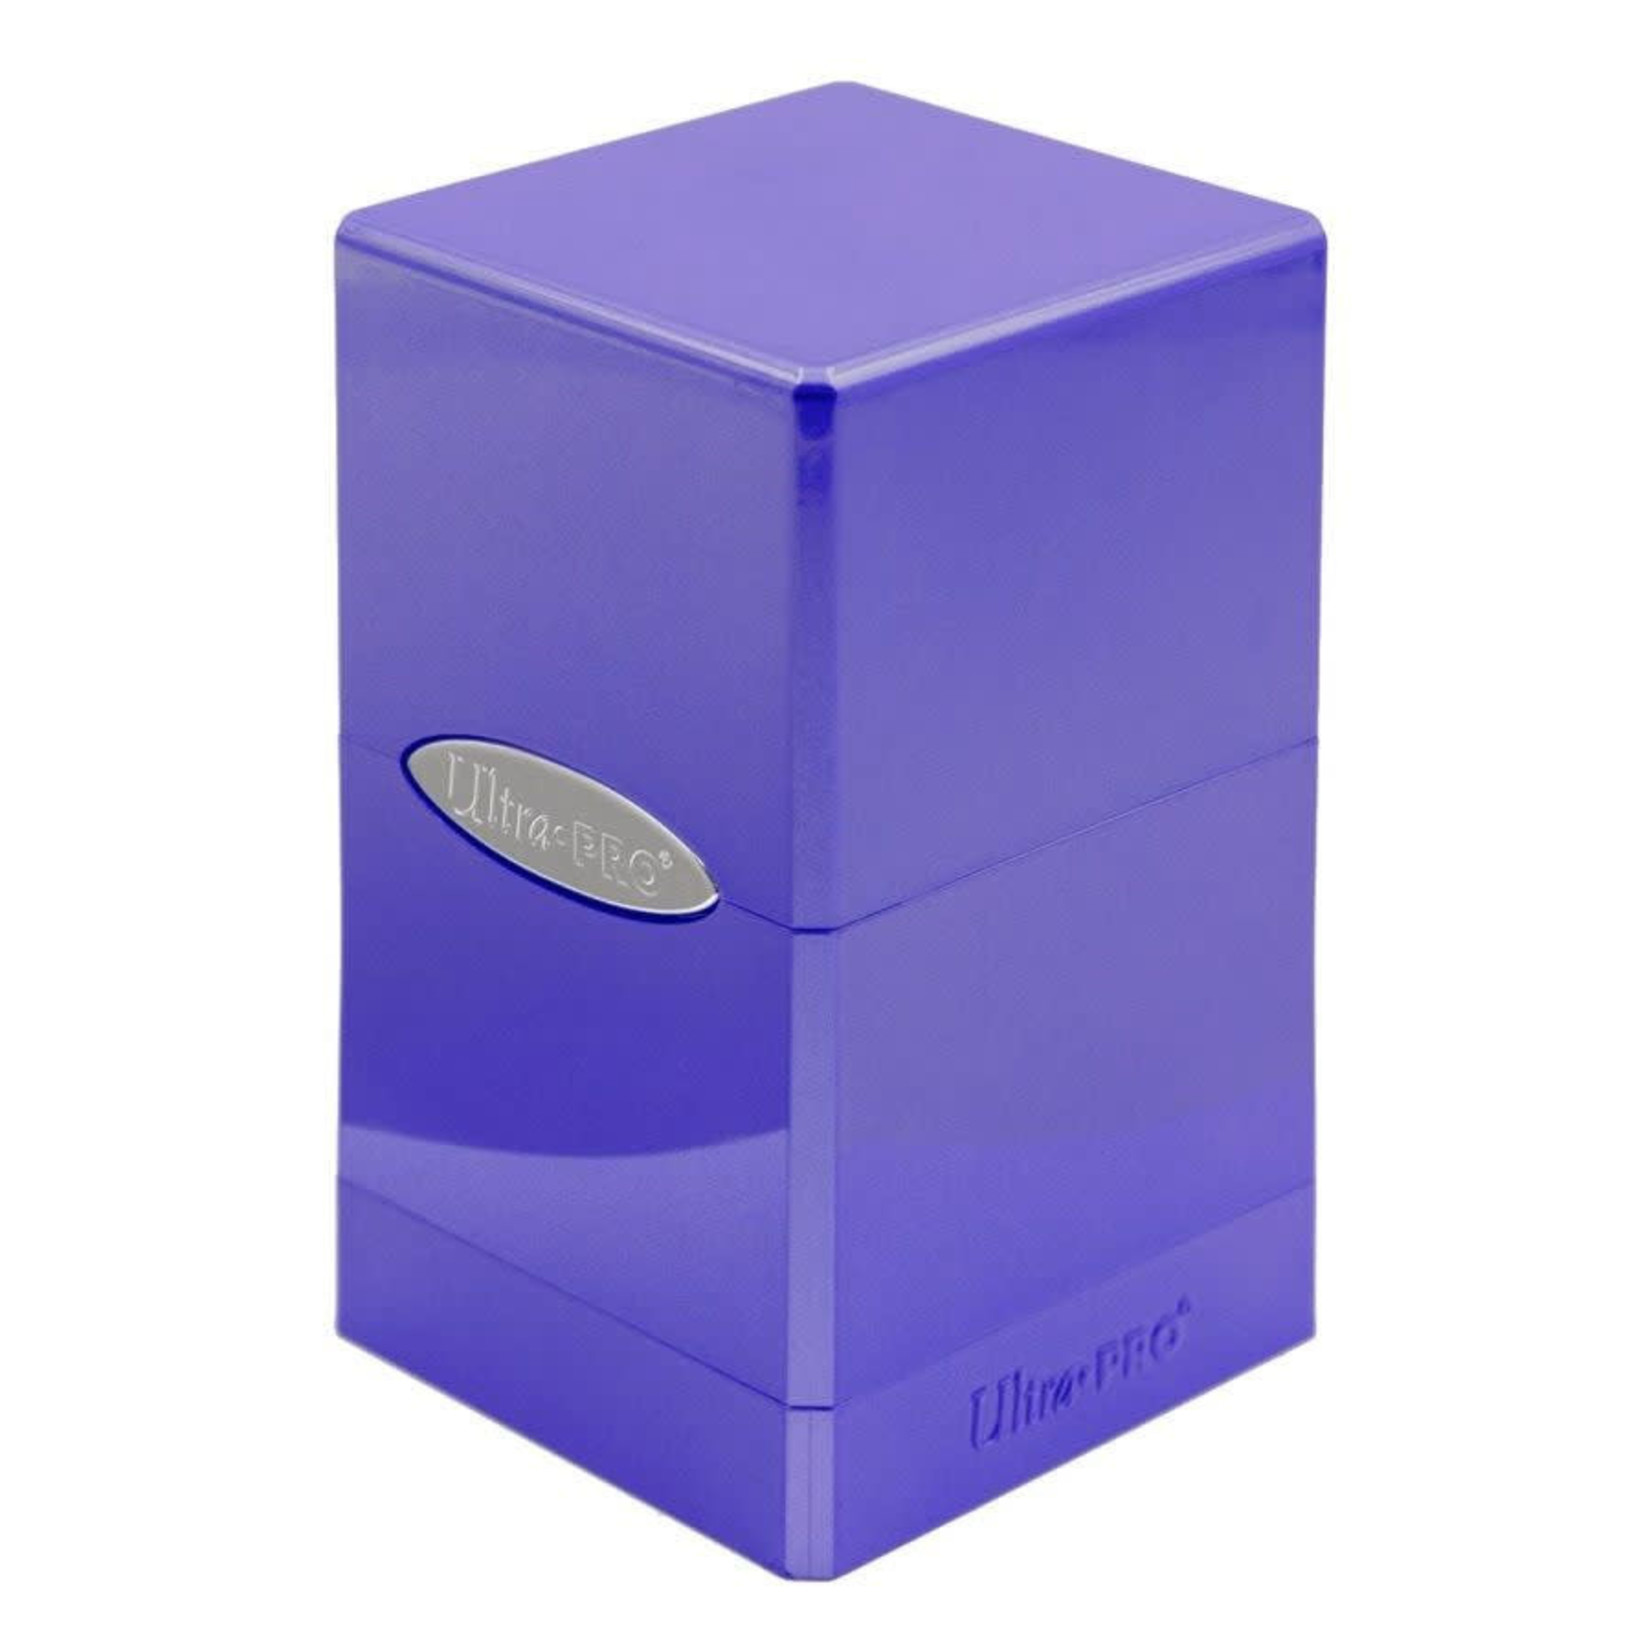 Ultra Pro Satin Tower Hi-Gloss Amethyst Deckbox